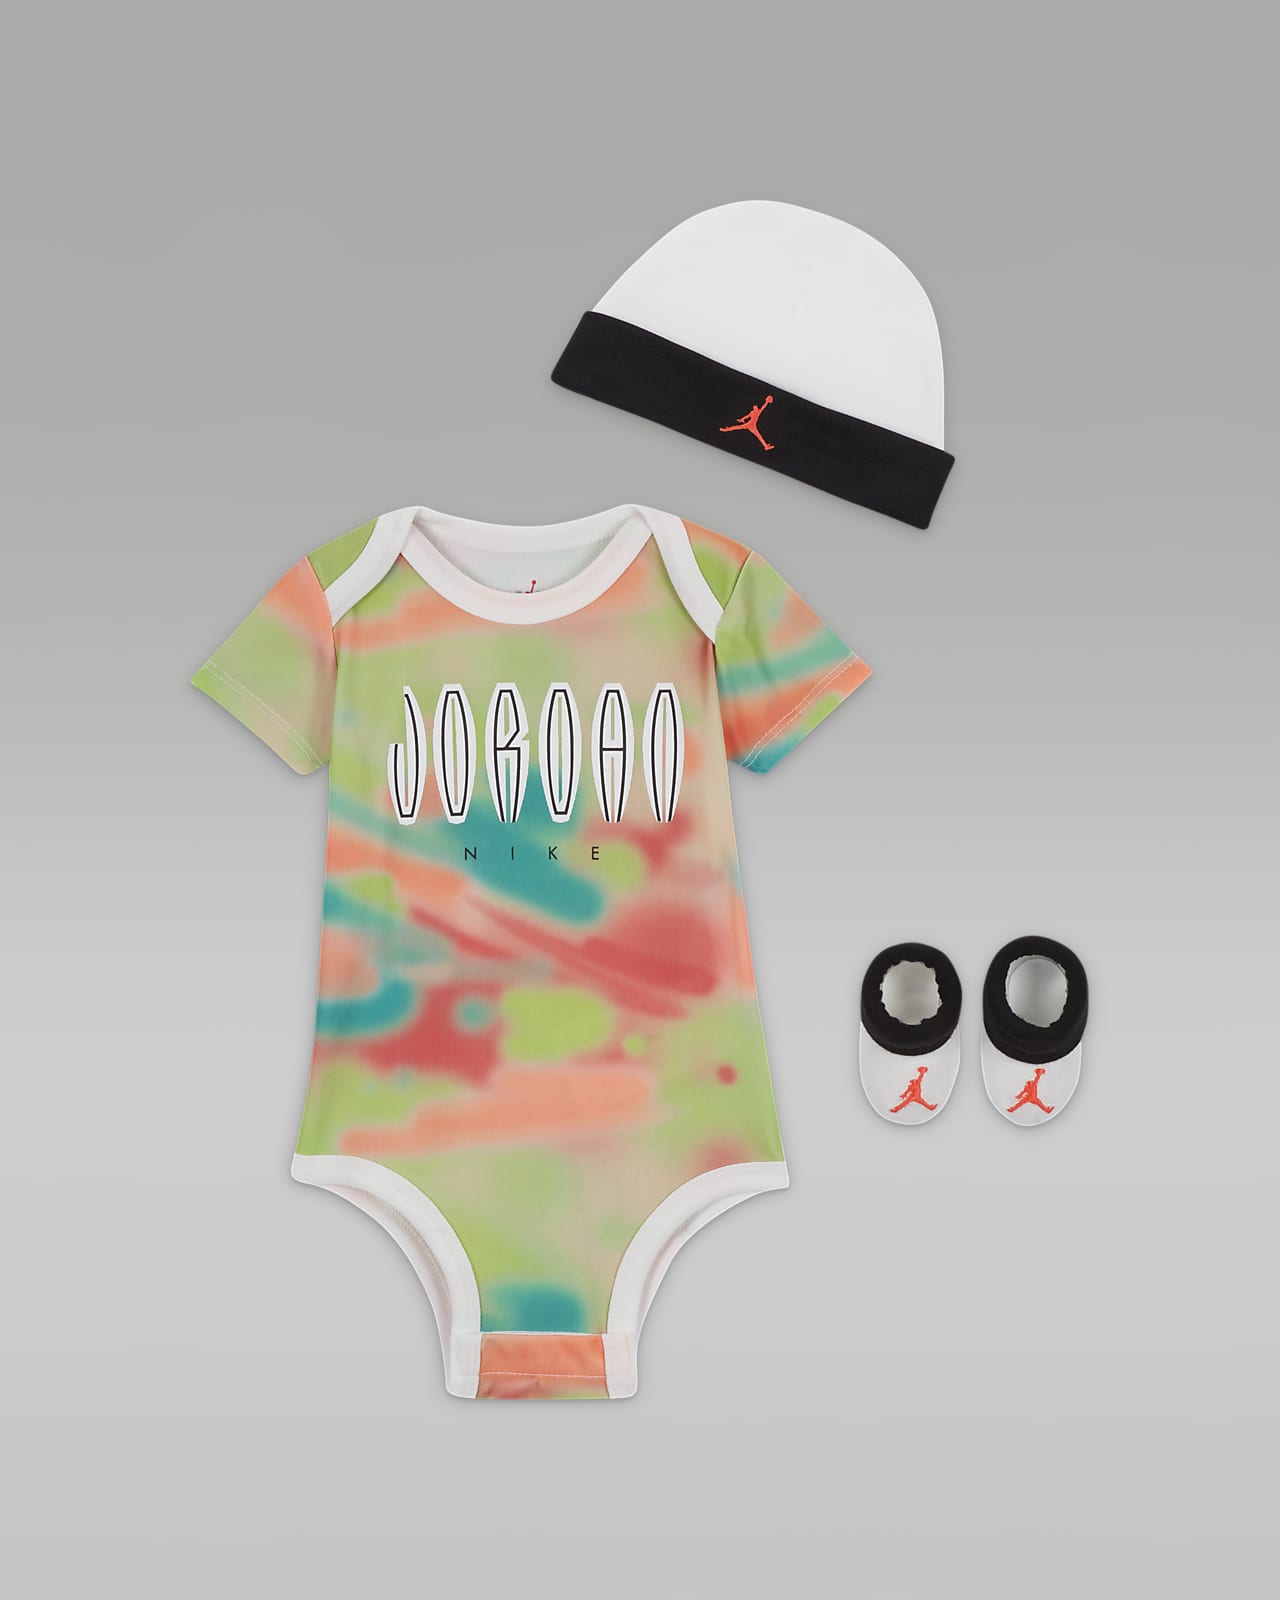 Nike Baby (12–24M) T-Shirt and Shorts Set. Nike LU